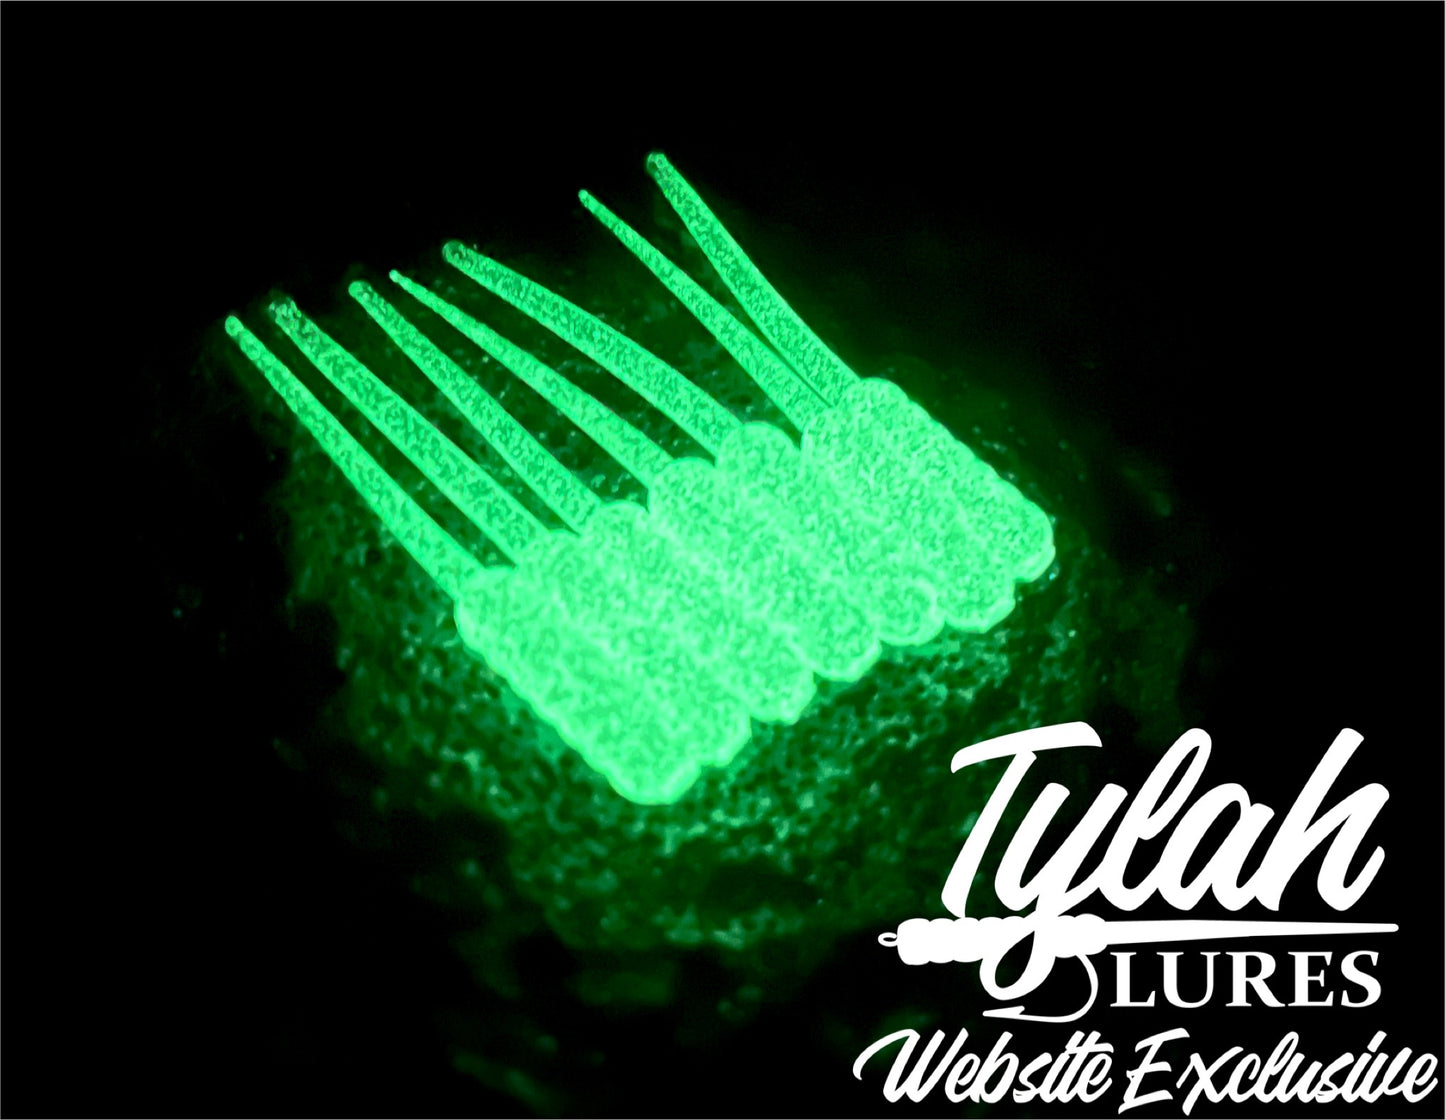 TylahLures Website Exclusive Glitter Glow 1.5in.